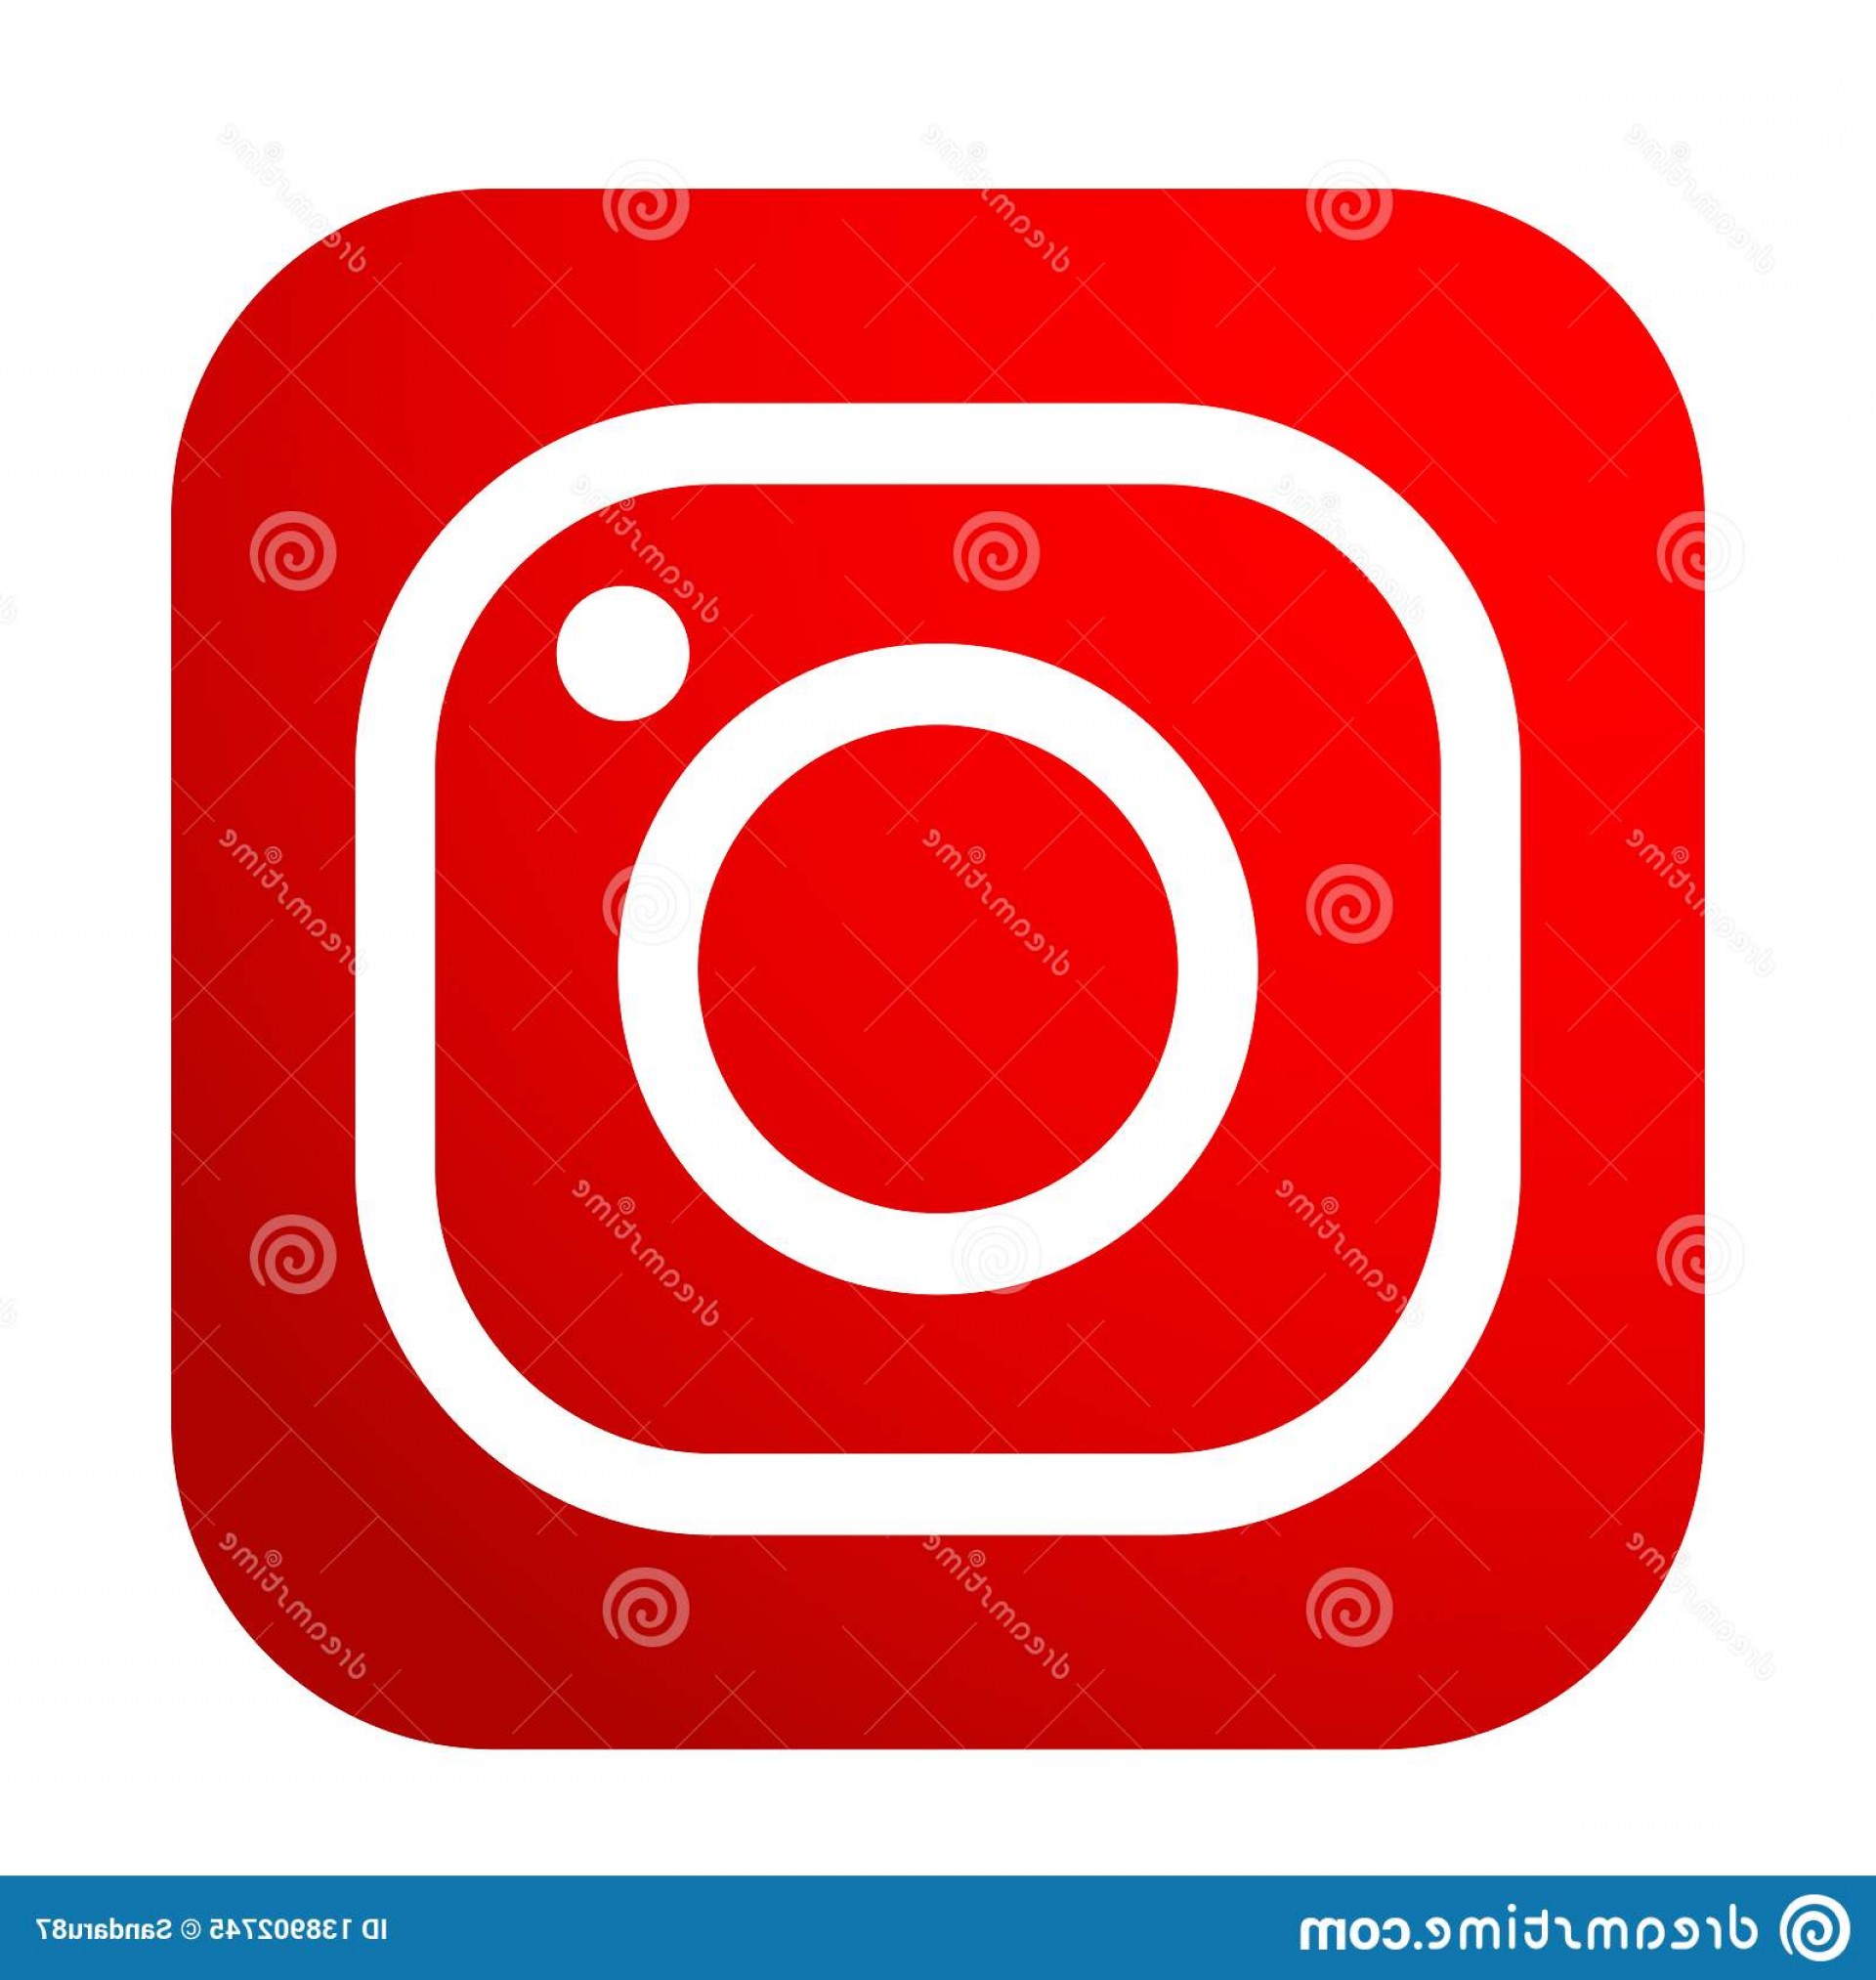 Instagram Logo Vector at Vectorified.com | Collection of Instagram Logo ...